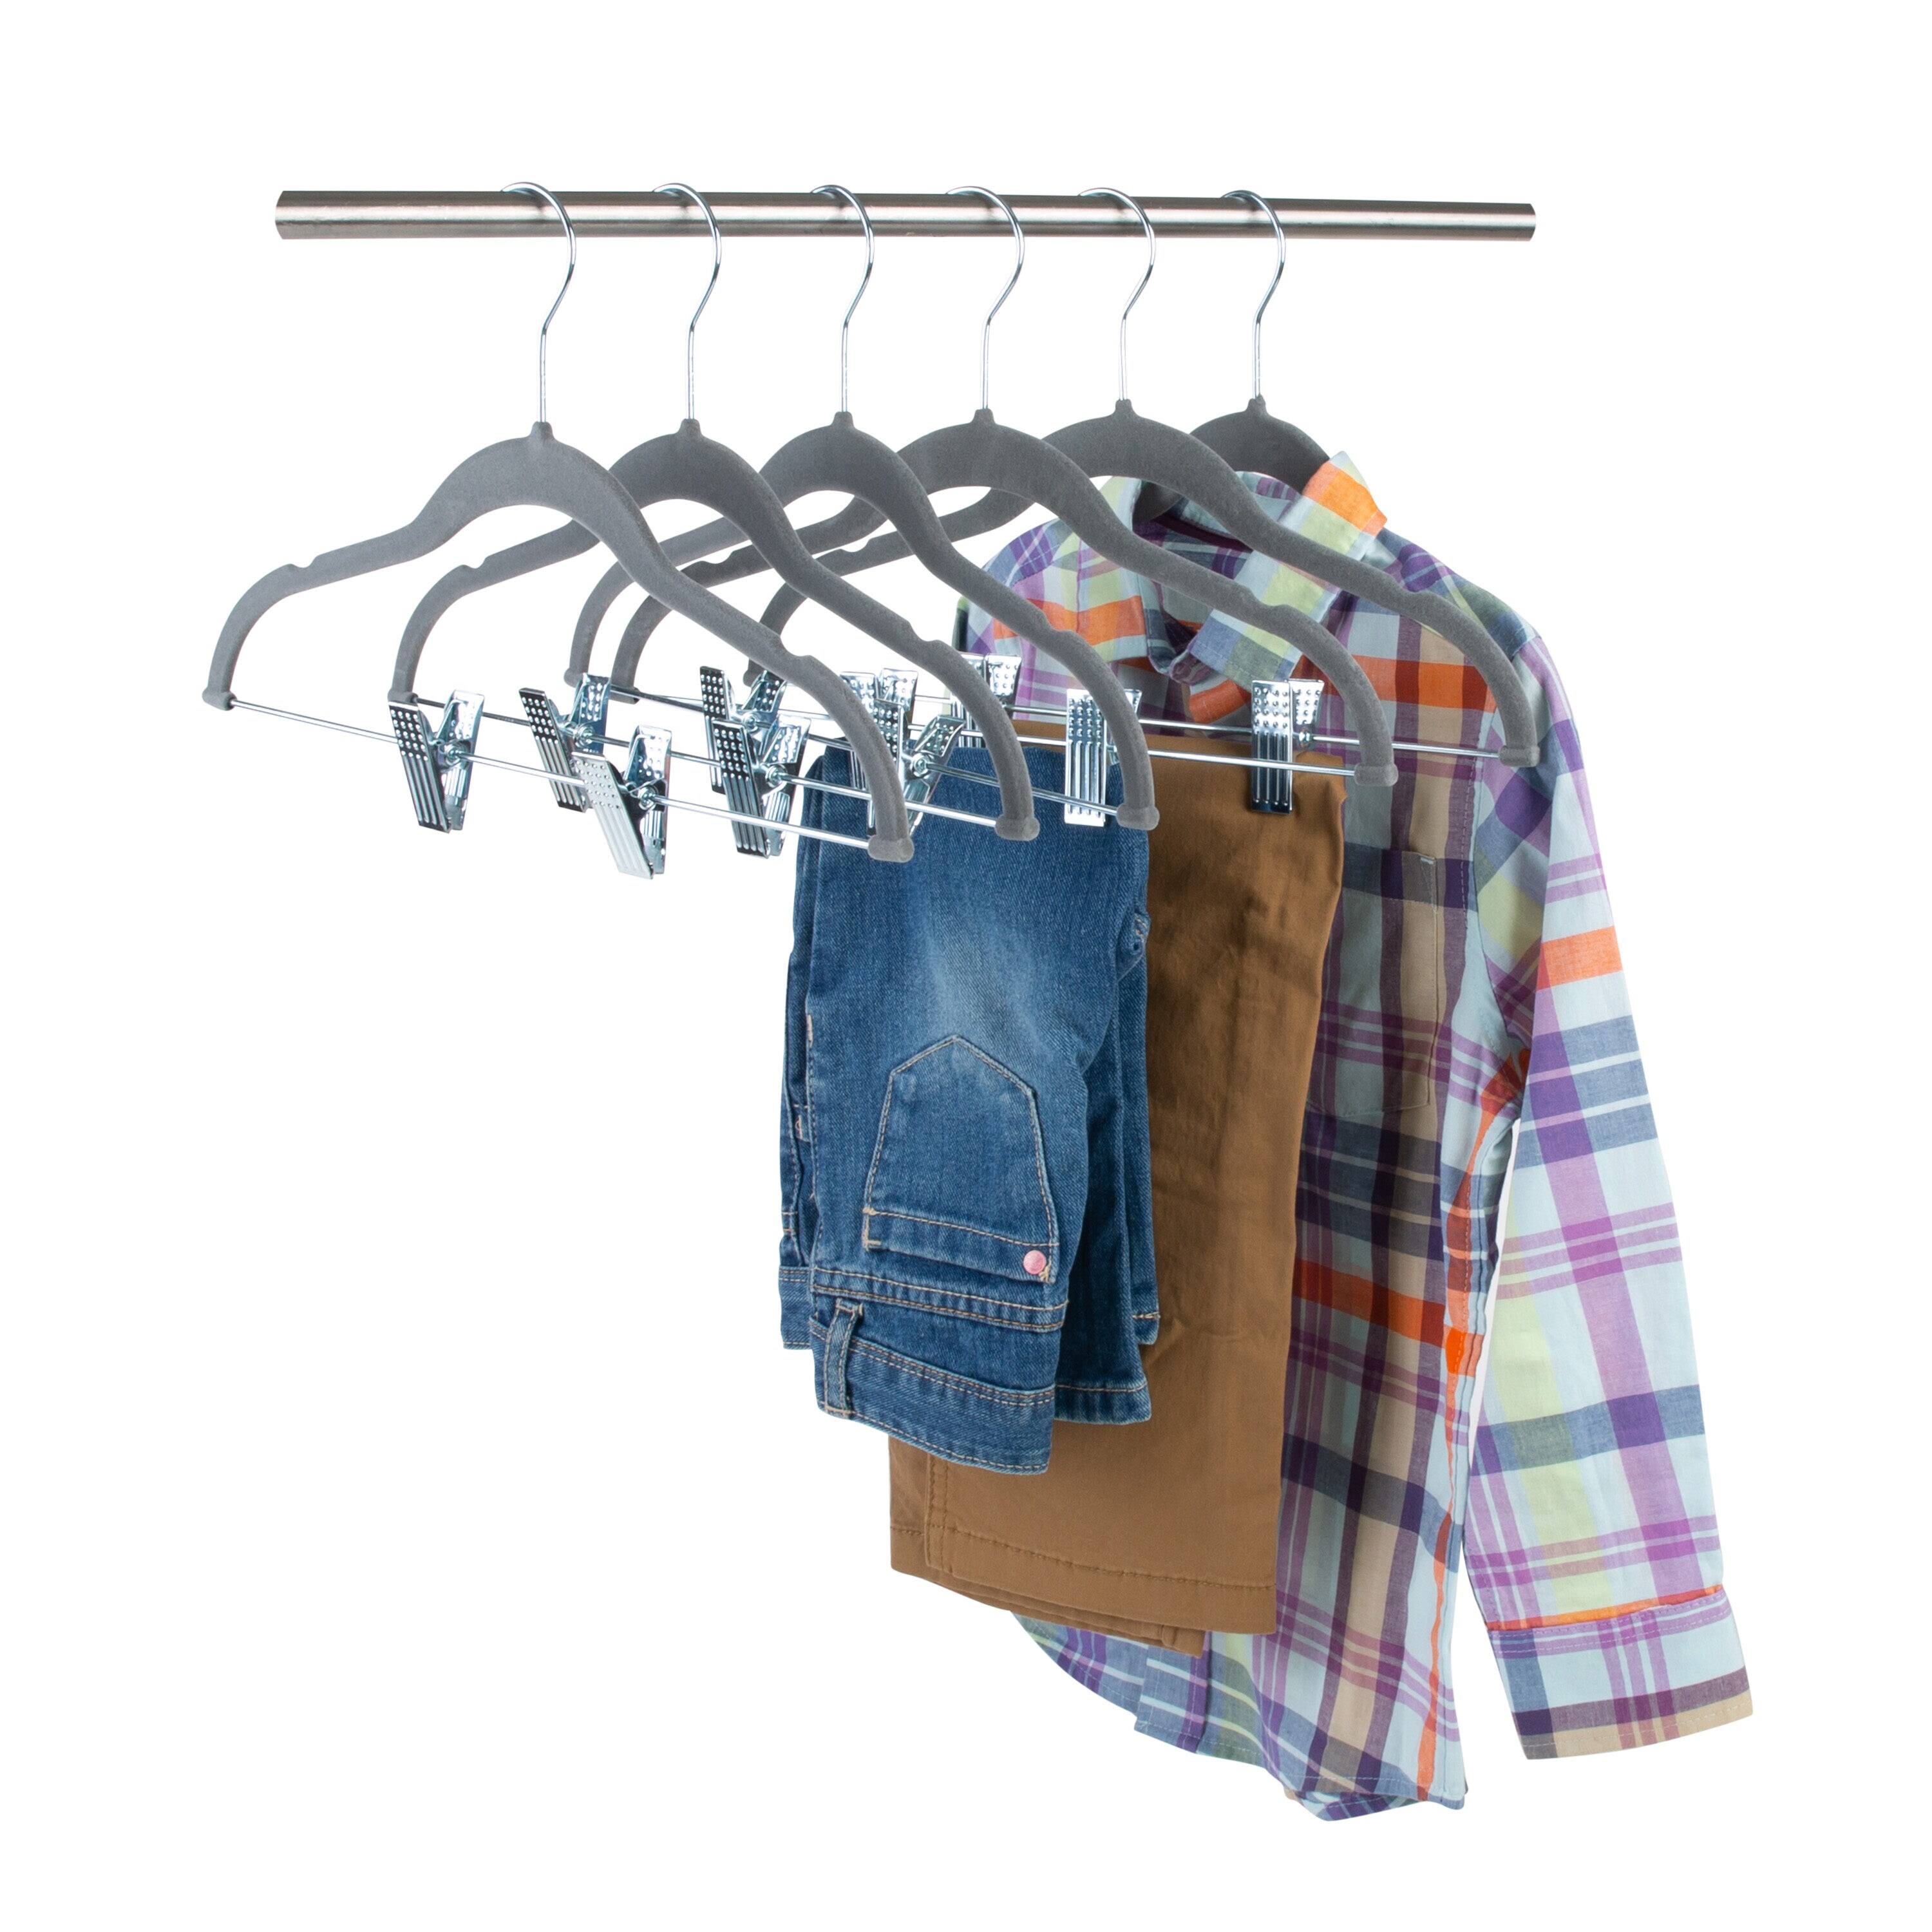 Simplify Kids 50 Pack Velvet Shirt Hangers in Neon Colors 